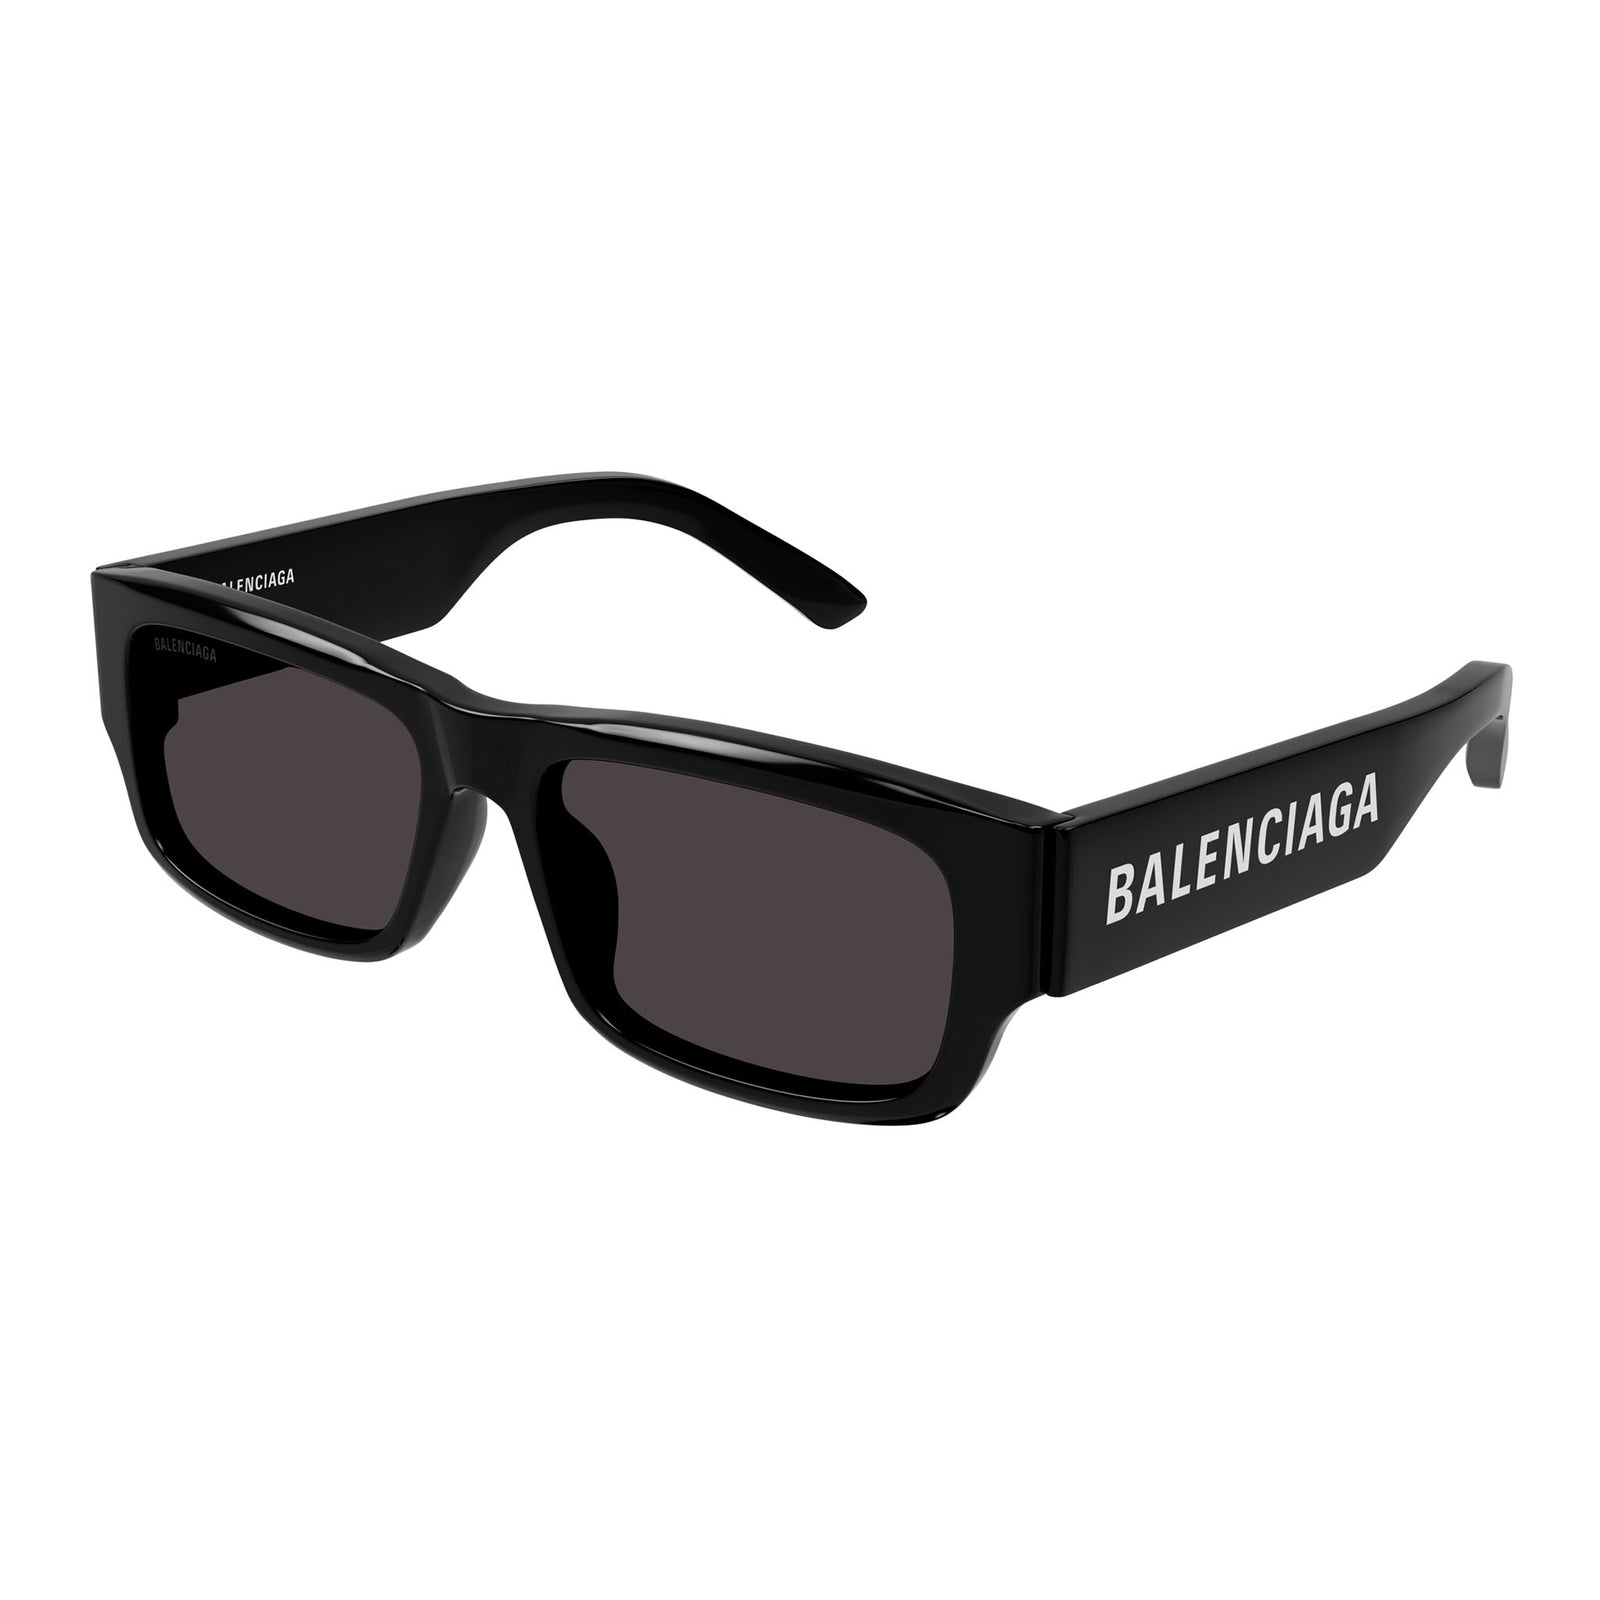 Amazoncom Balenciaga BB0157S SilverSilver 6517125 men Sunglasses   Clothing Shoes  Jewelry